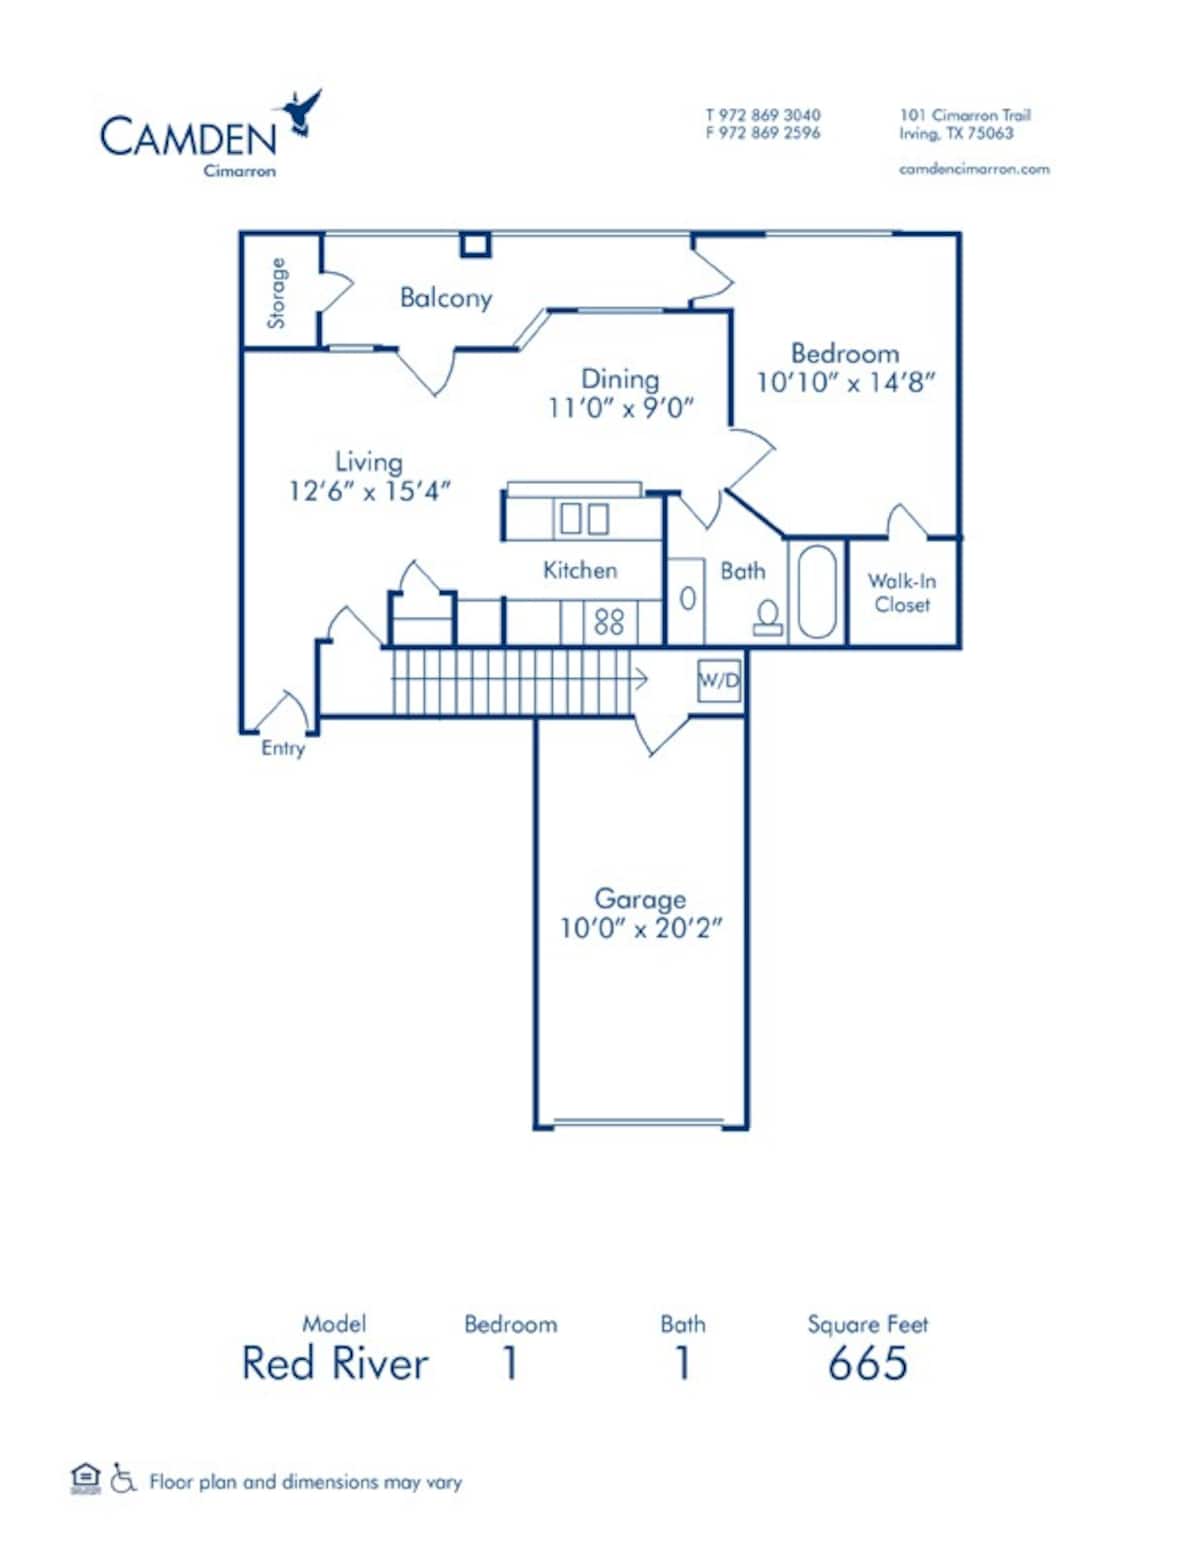 Floorplan diagram for Red River, showing 1 bedroom